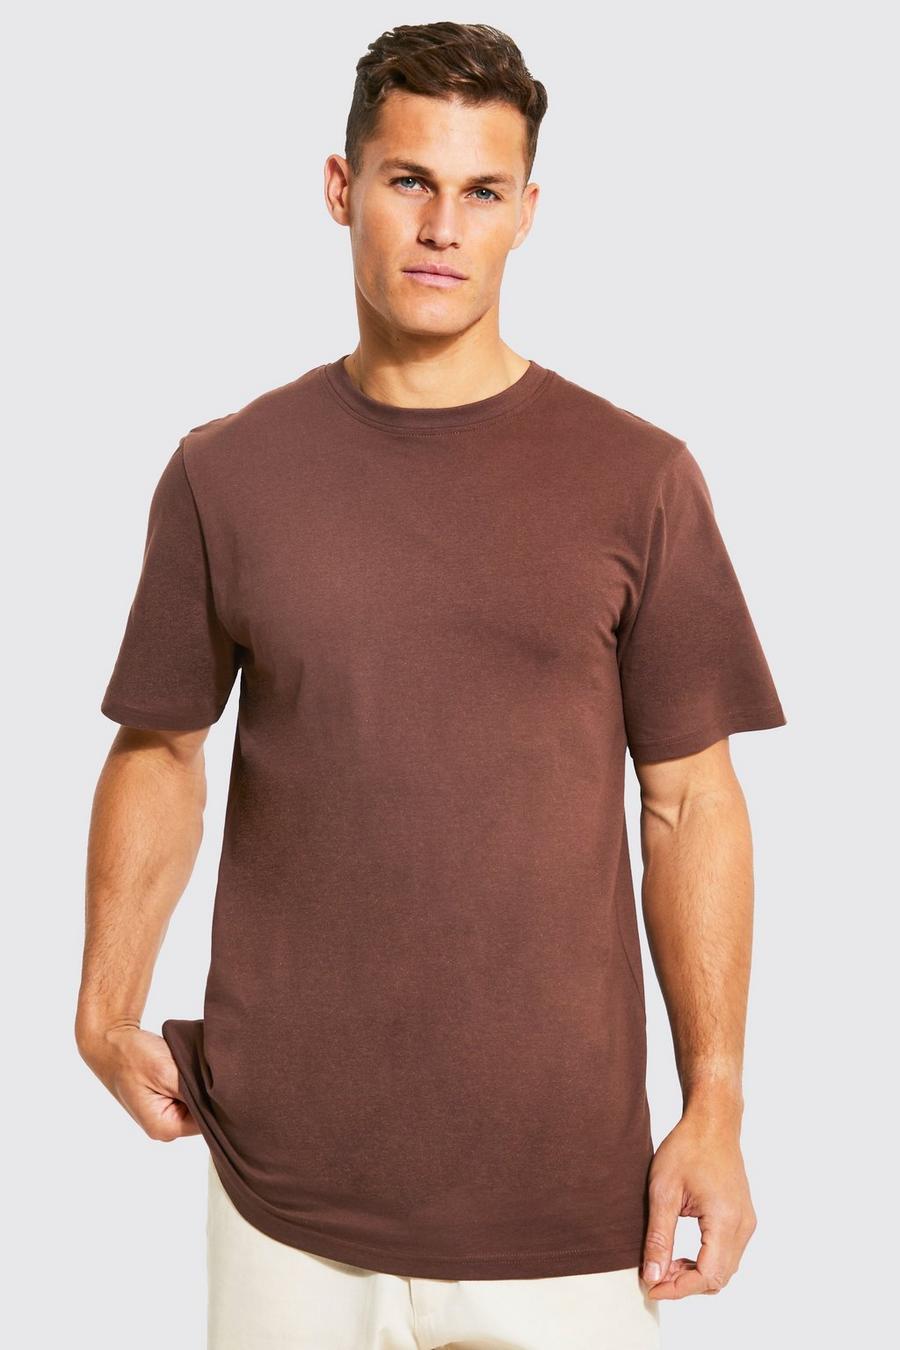 Chocolate brown Tall Basic Longline Crew Neck T-shirt